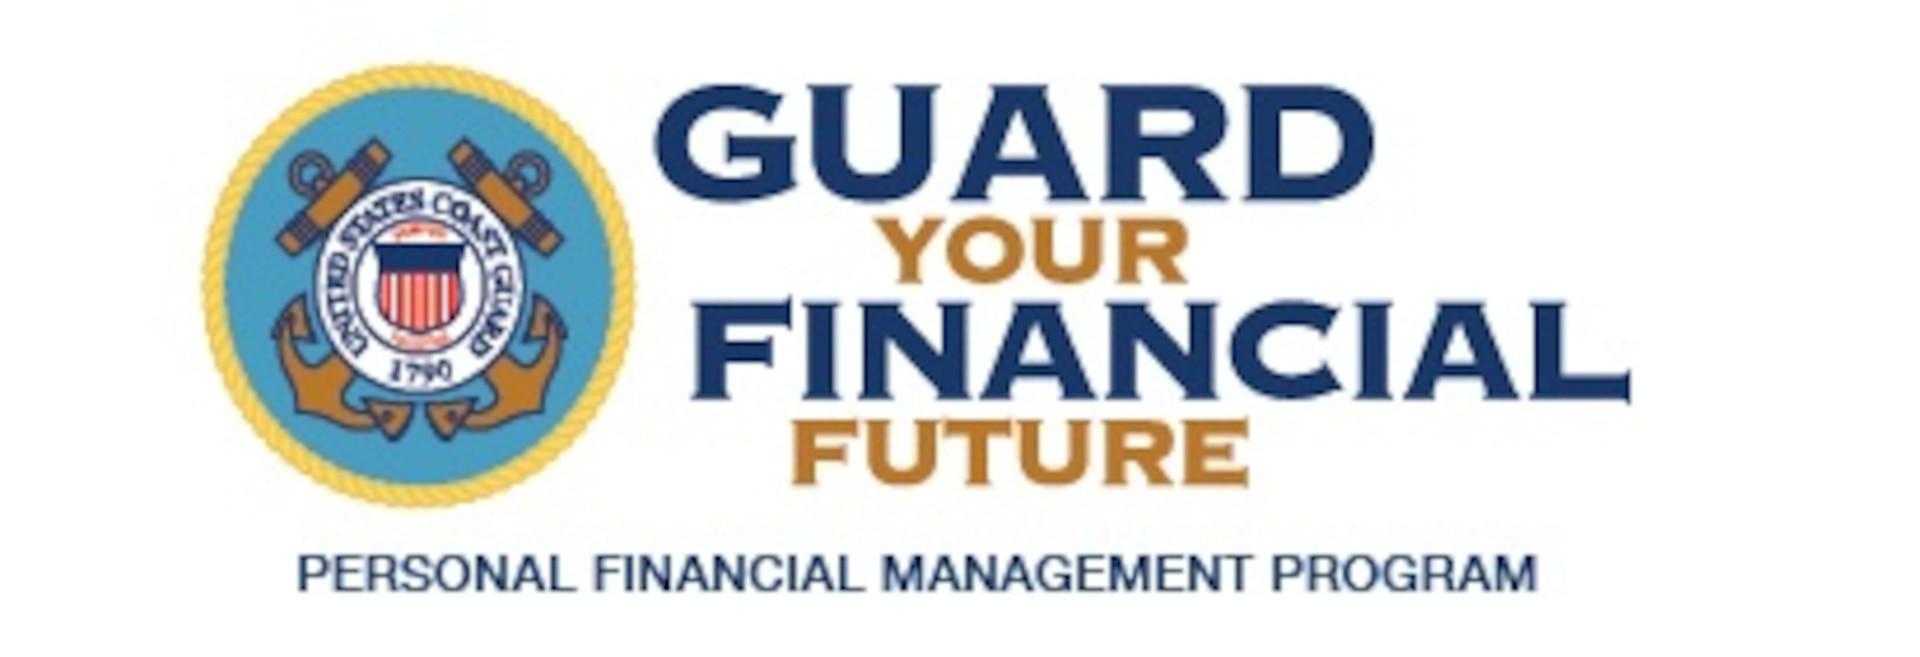 Financial management logo